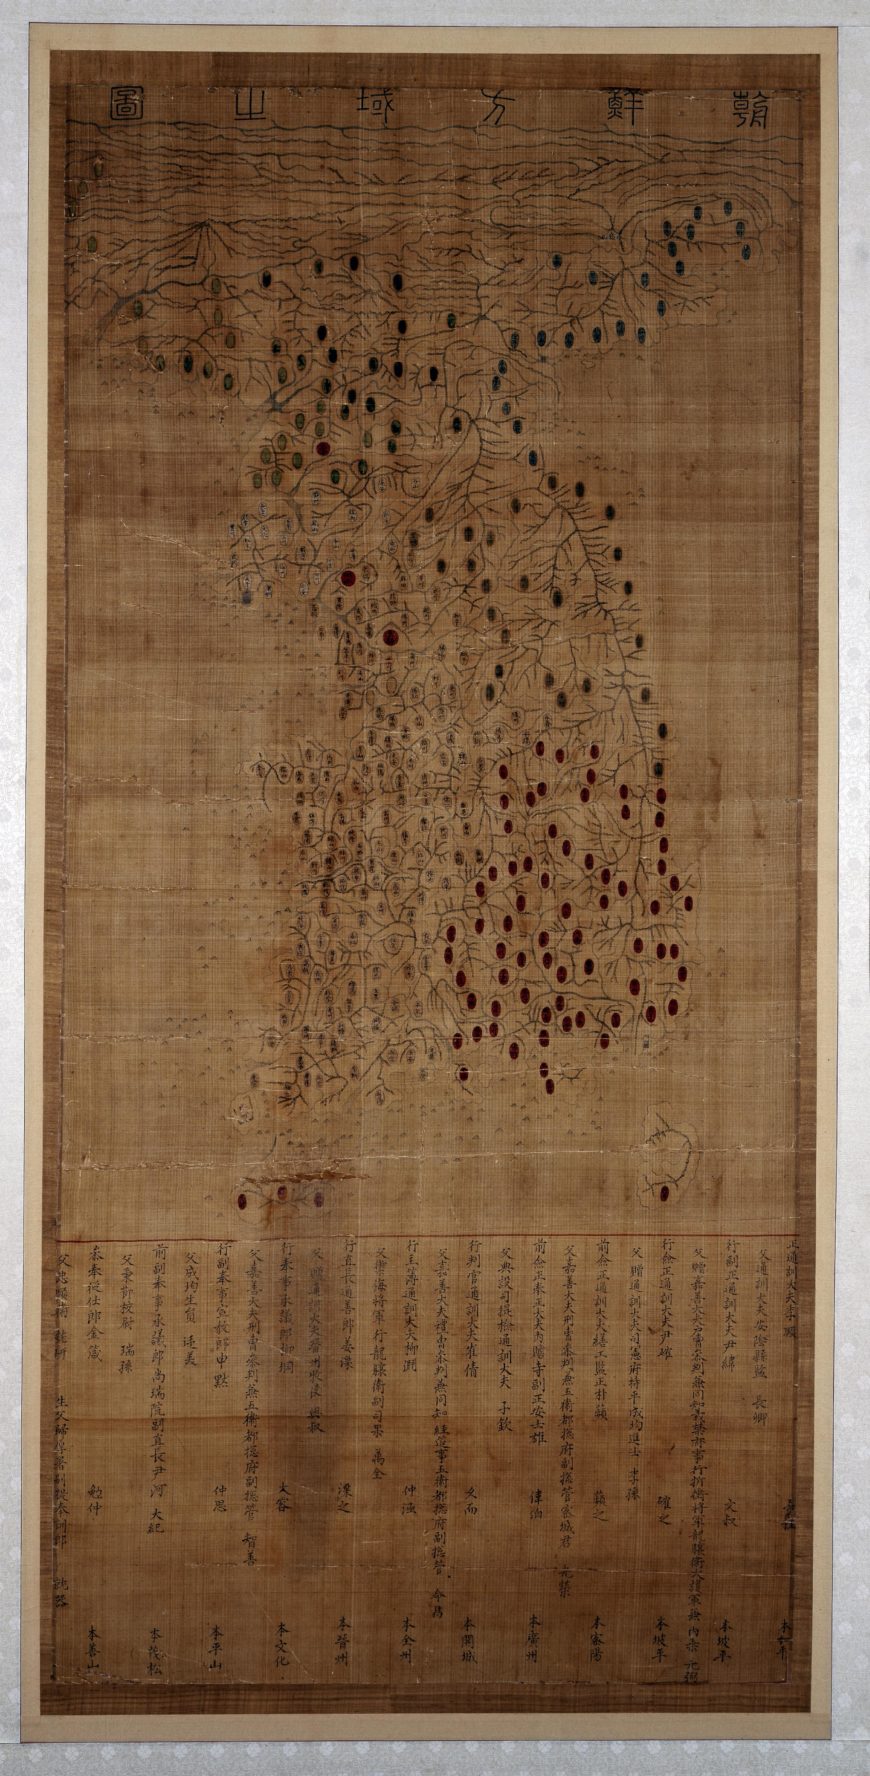 Bangyeok jido (Map of the Korean Territory), 1558, Joseon Period, 61 x 132 cm